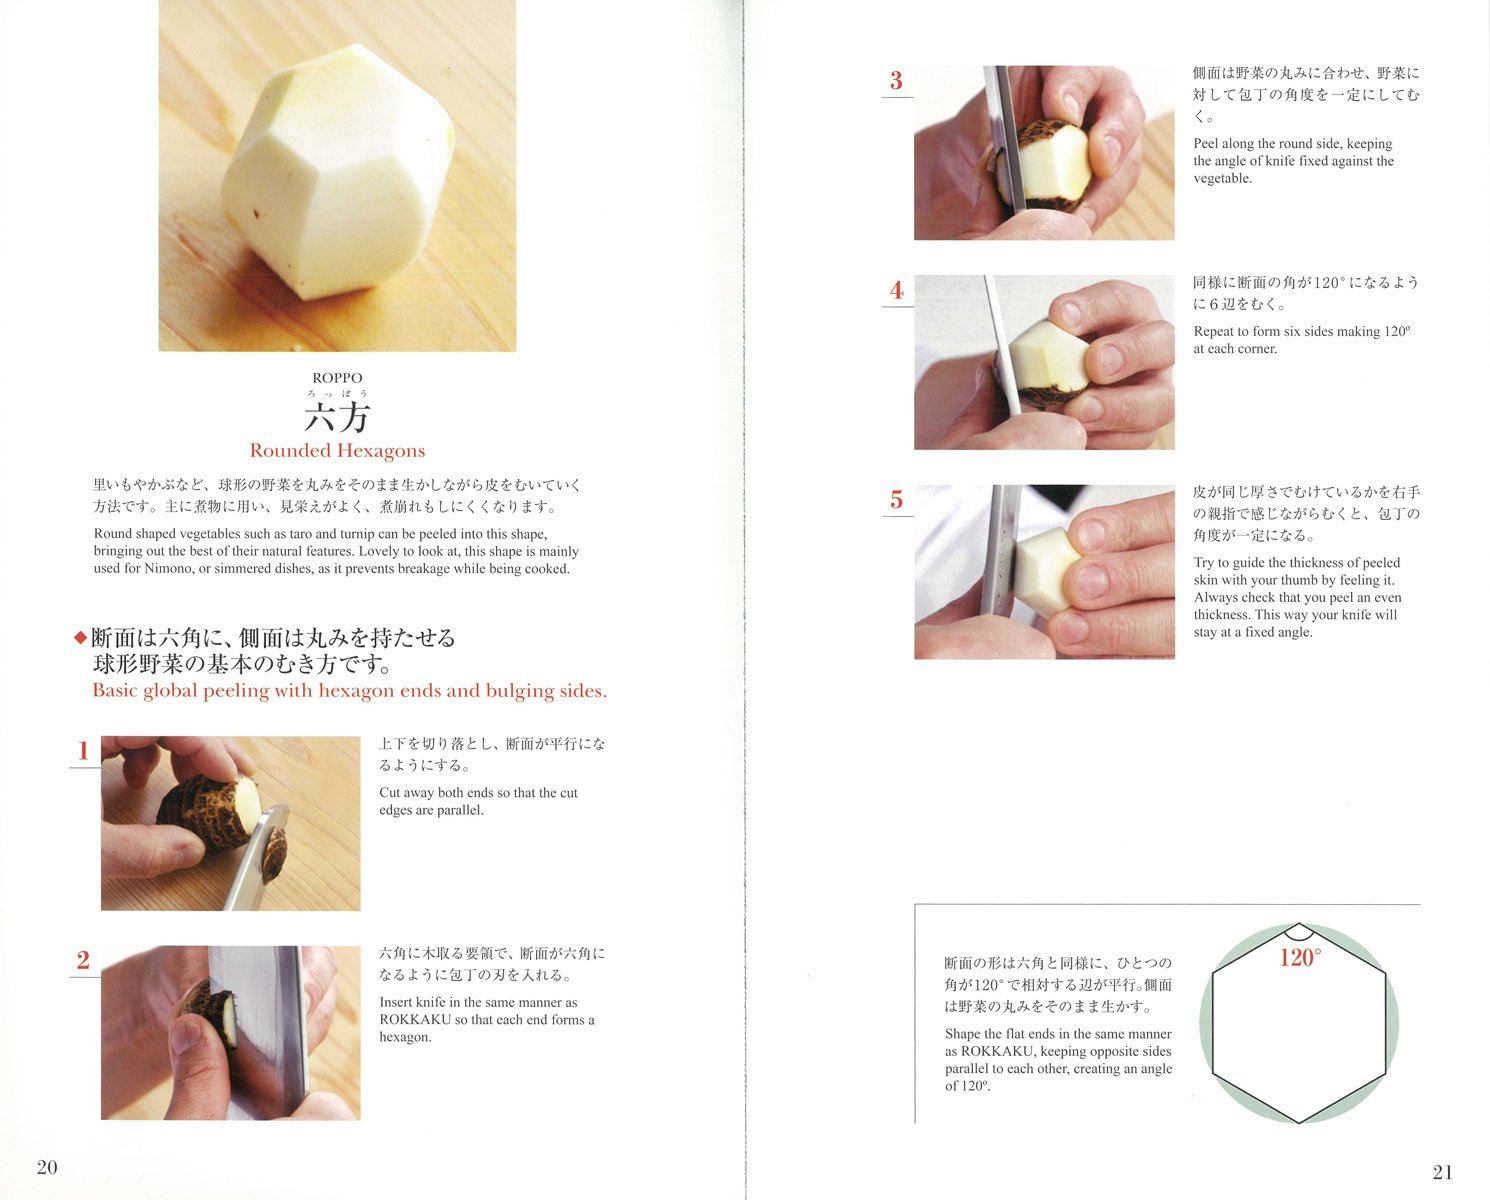 Handbook on Japanese Food: Carving Techniques for Seasonal Vegetables (Japanese-English Bilingual Books)